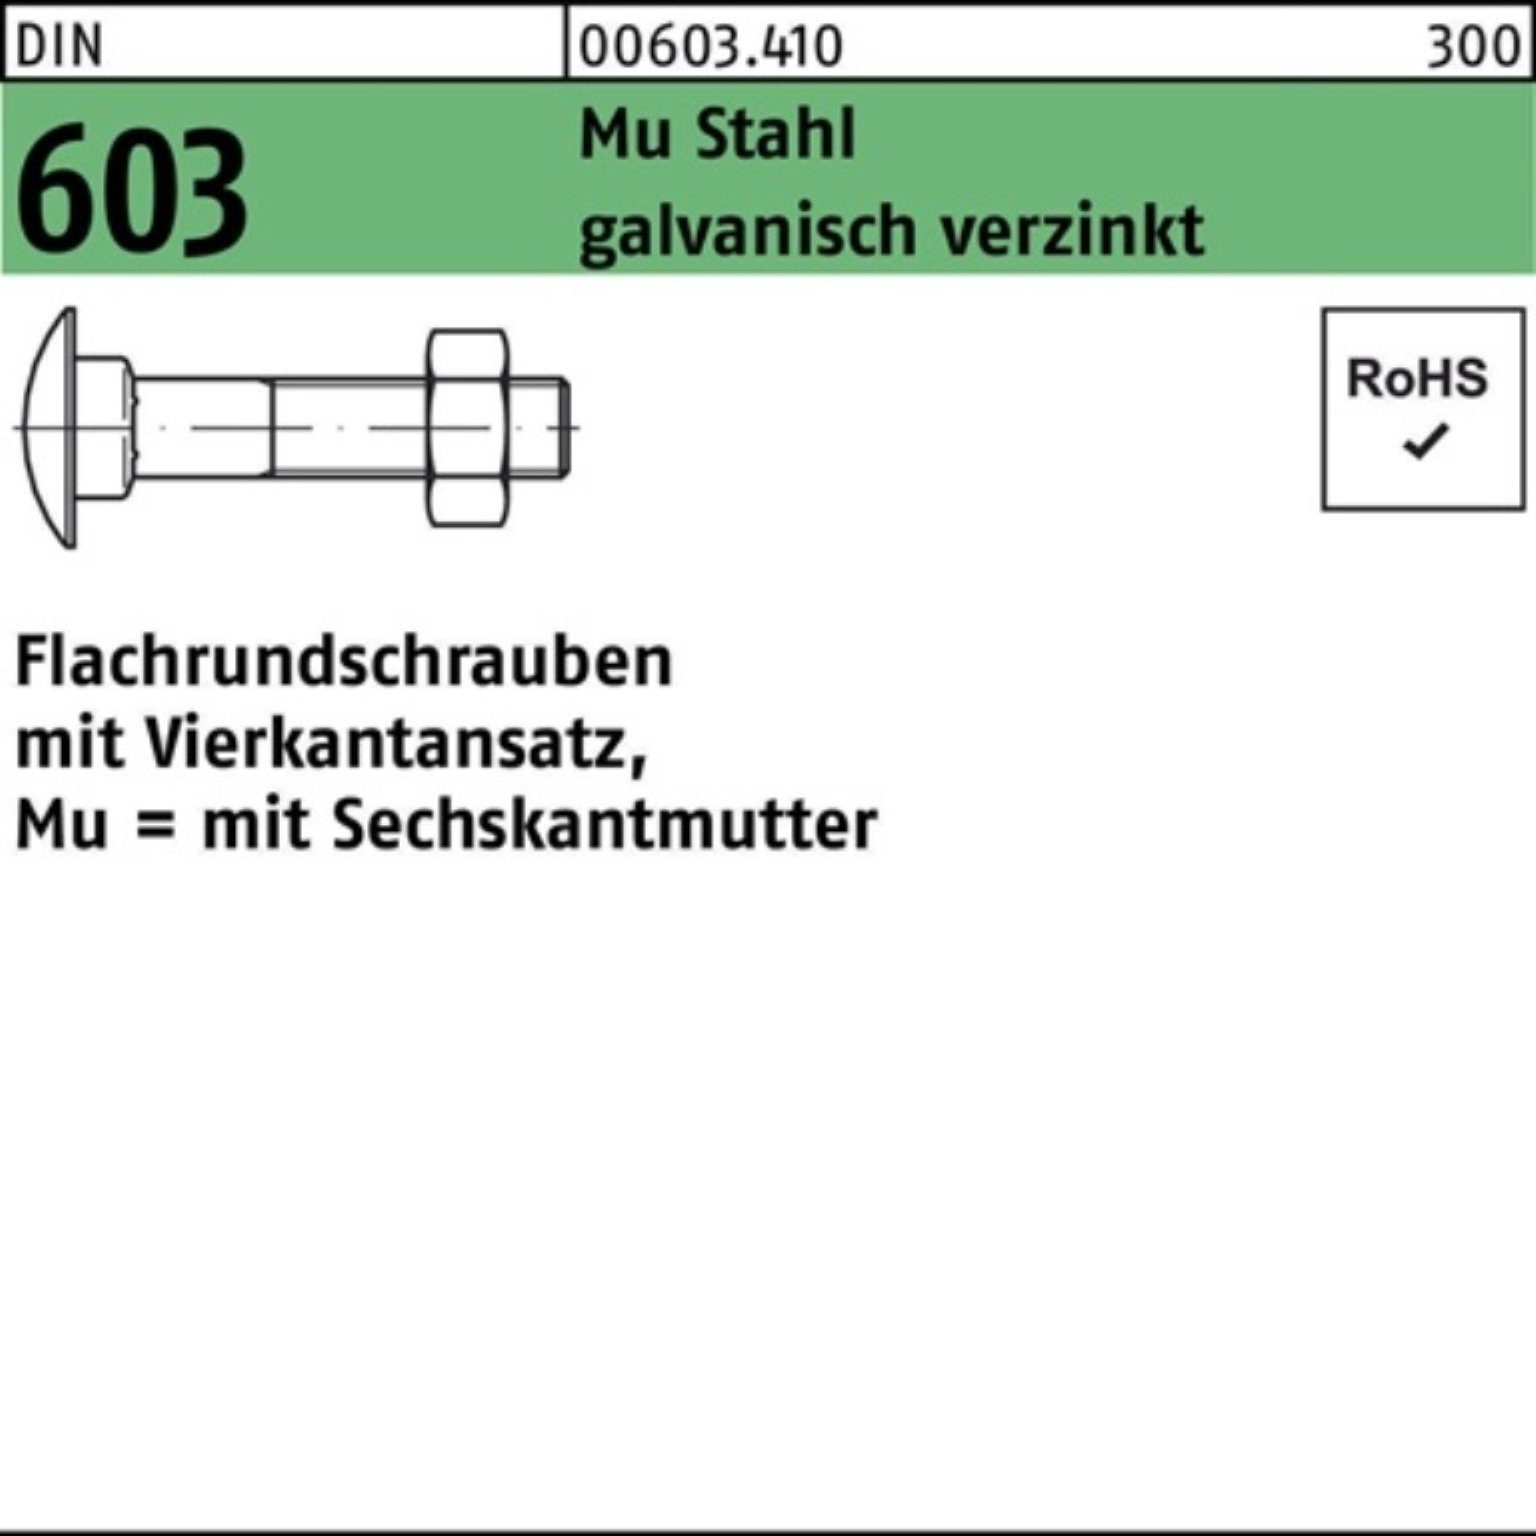 DIN M Vierkantansatz/6-ktmutter Flachrundschraube 200er Reyher M8x35 603 Schraube Pack